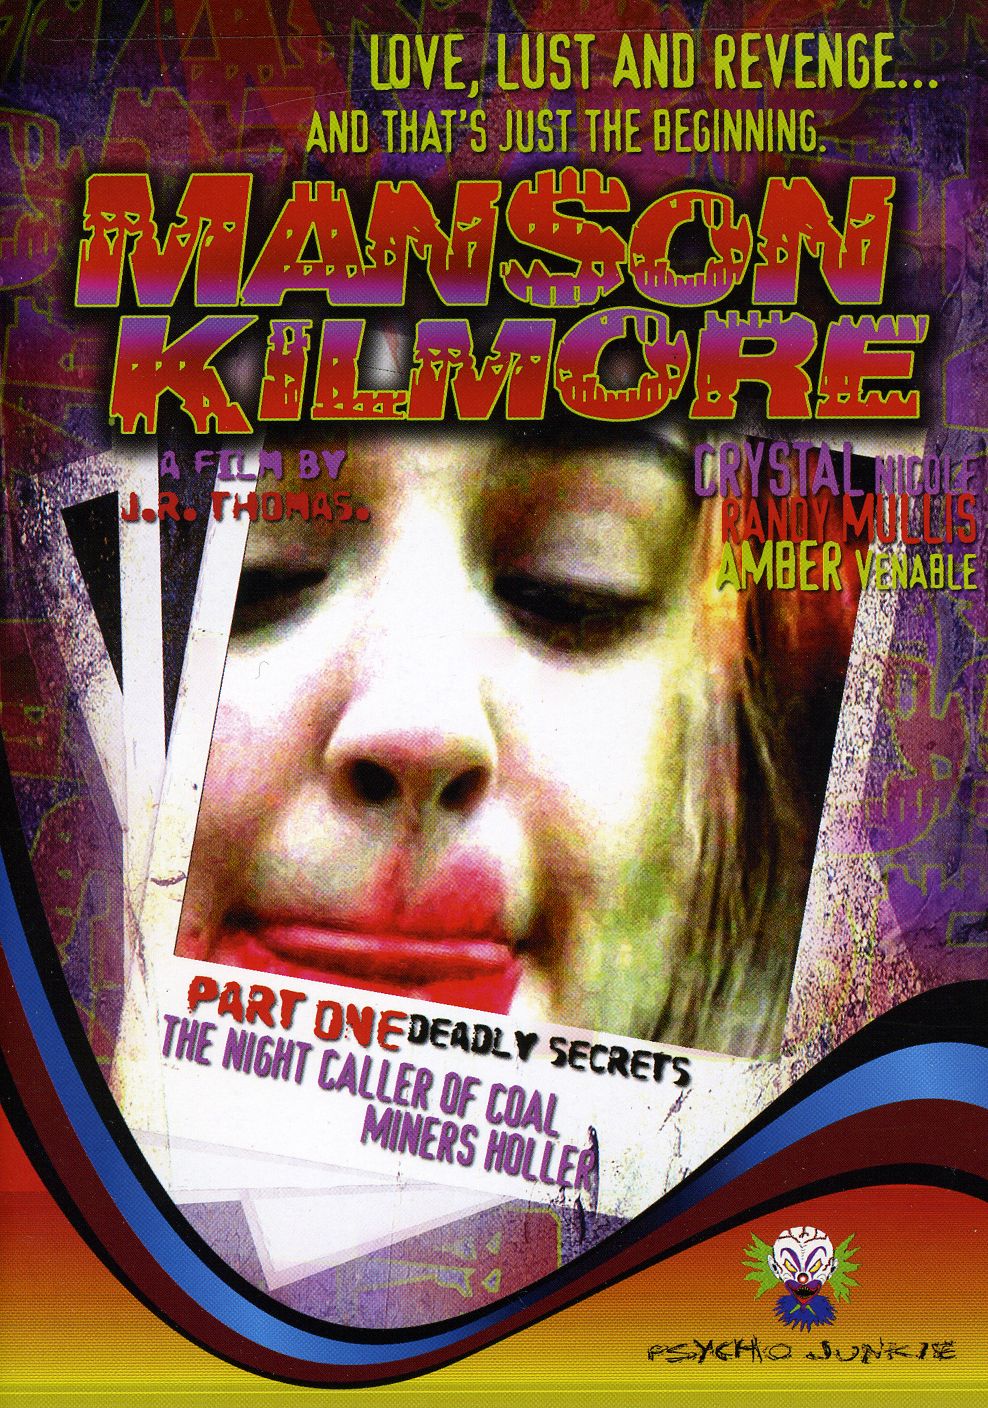 MANSON KILMORE: NIGHT CALLER OF COAL MINERS HOLLER